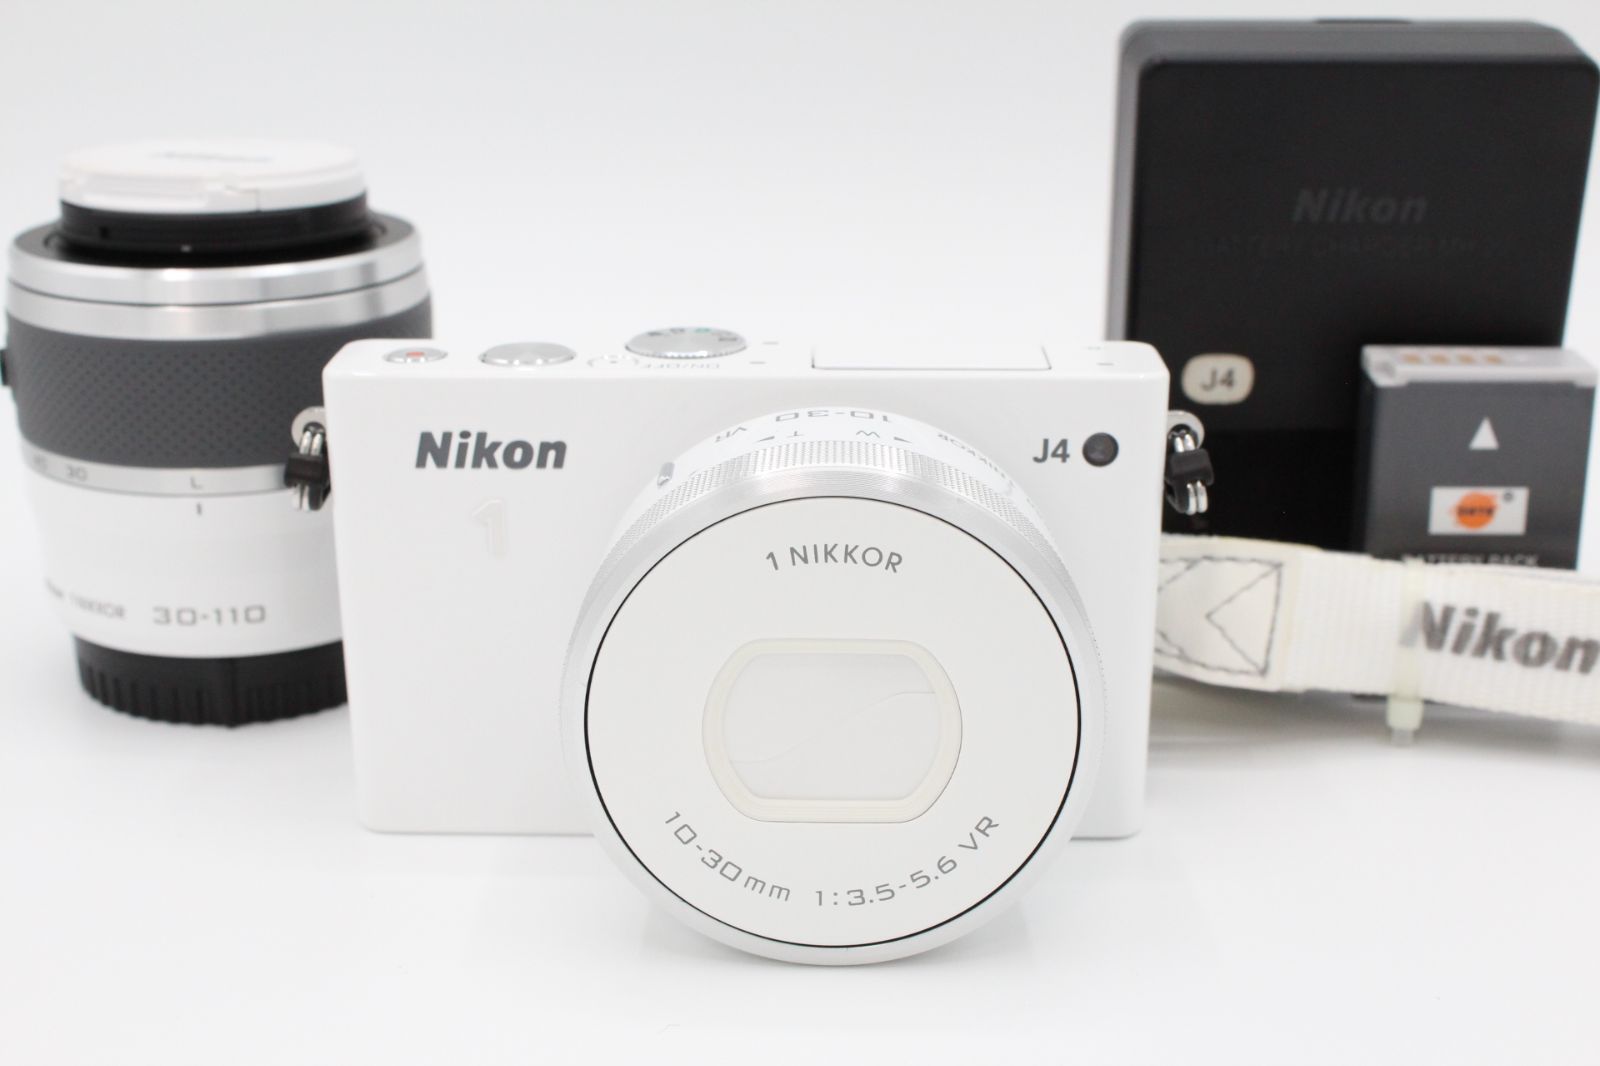 Nikon NIKON 1 J4 Wズームキット WHITE - デジタルカメラ